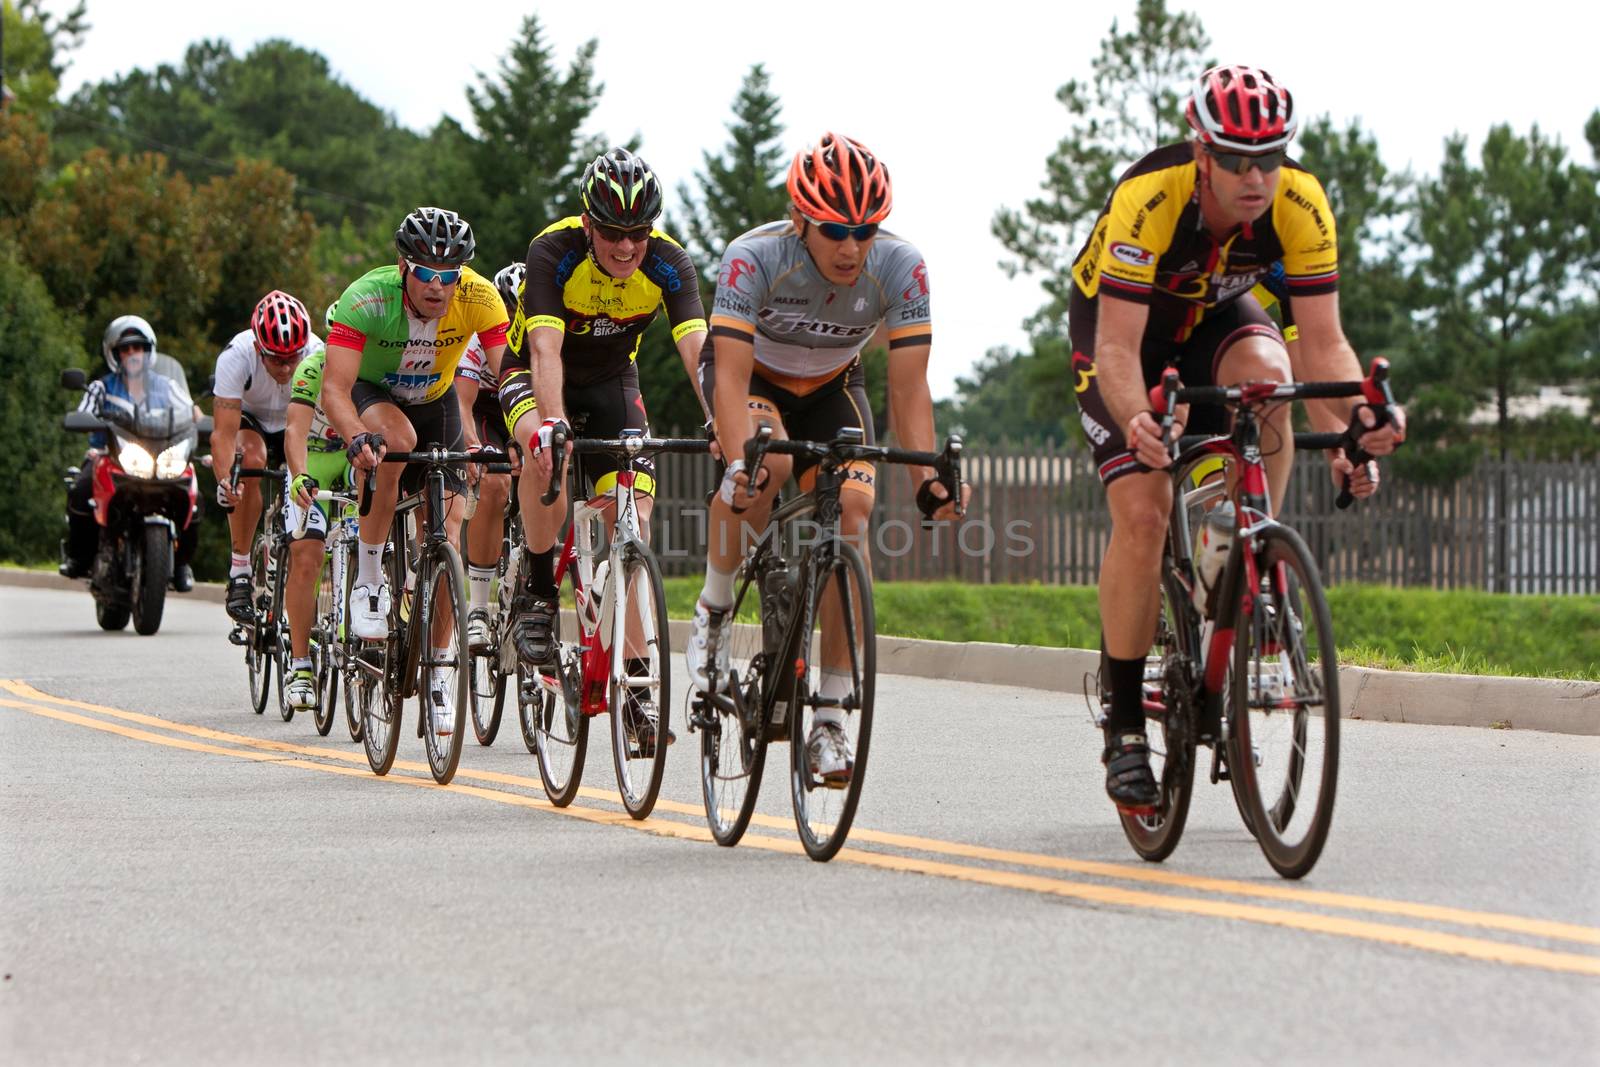 Cyclists Sprint Down Straightaway In Duluth Criterium Event by BluIz60